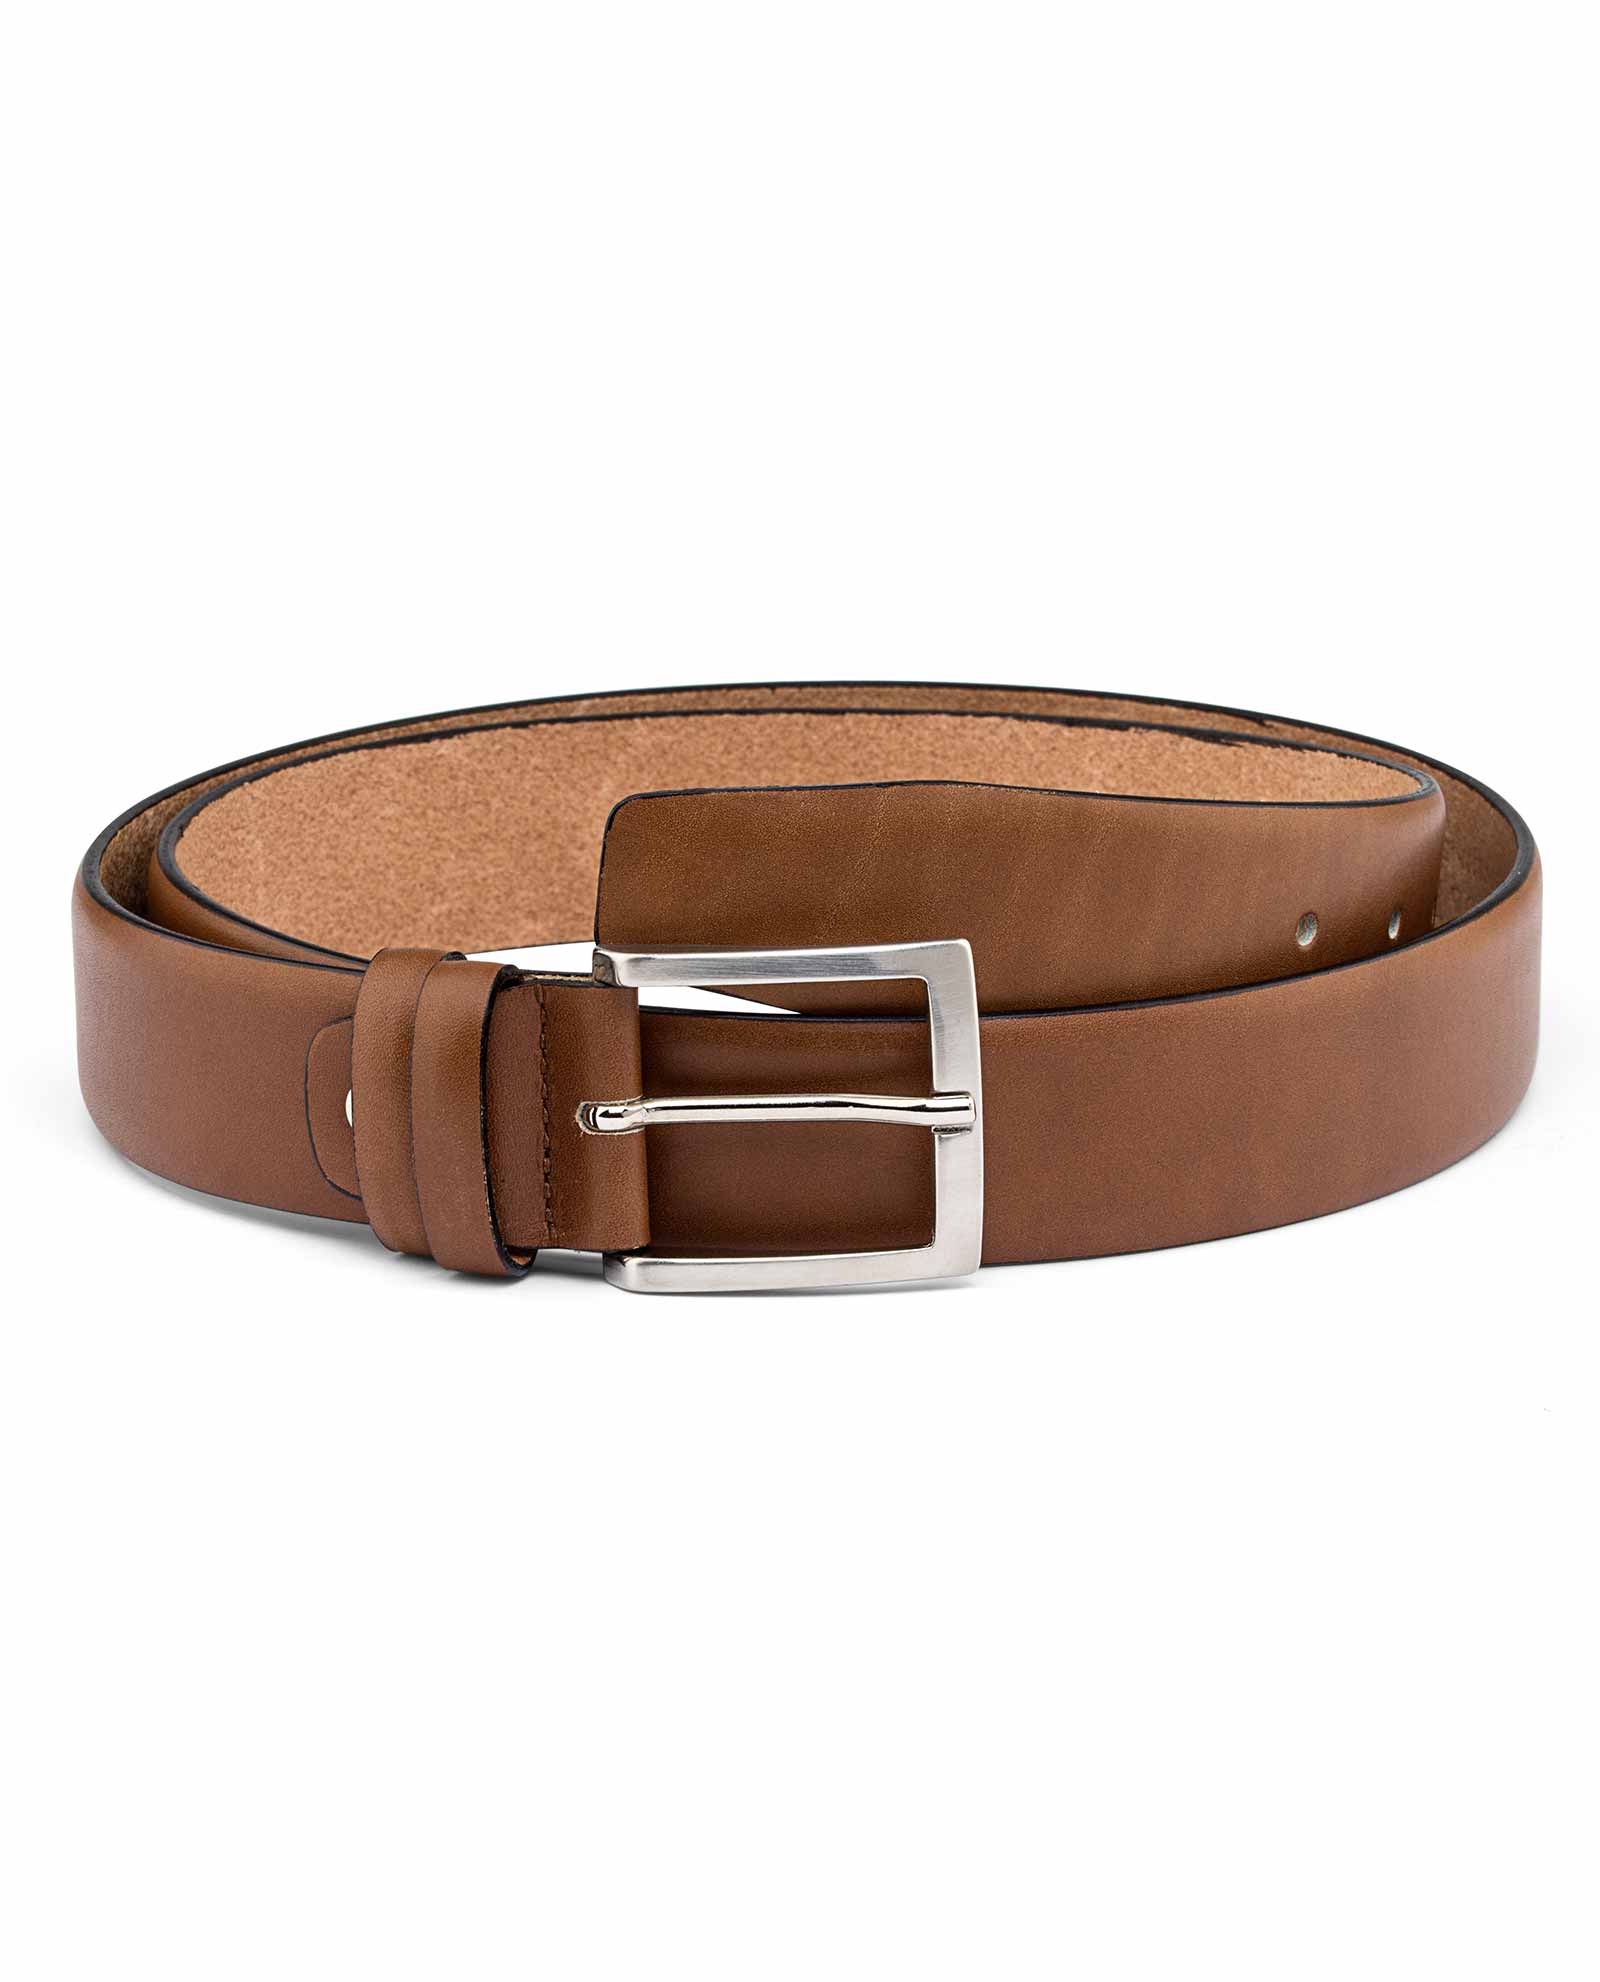 Buy Mens Brown Nappa Leather Belt - LeatherBeltsOnline.com - FREE SHIP